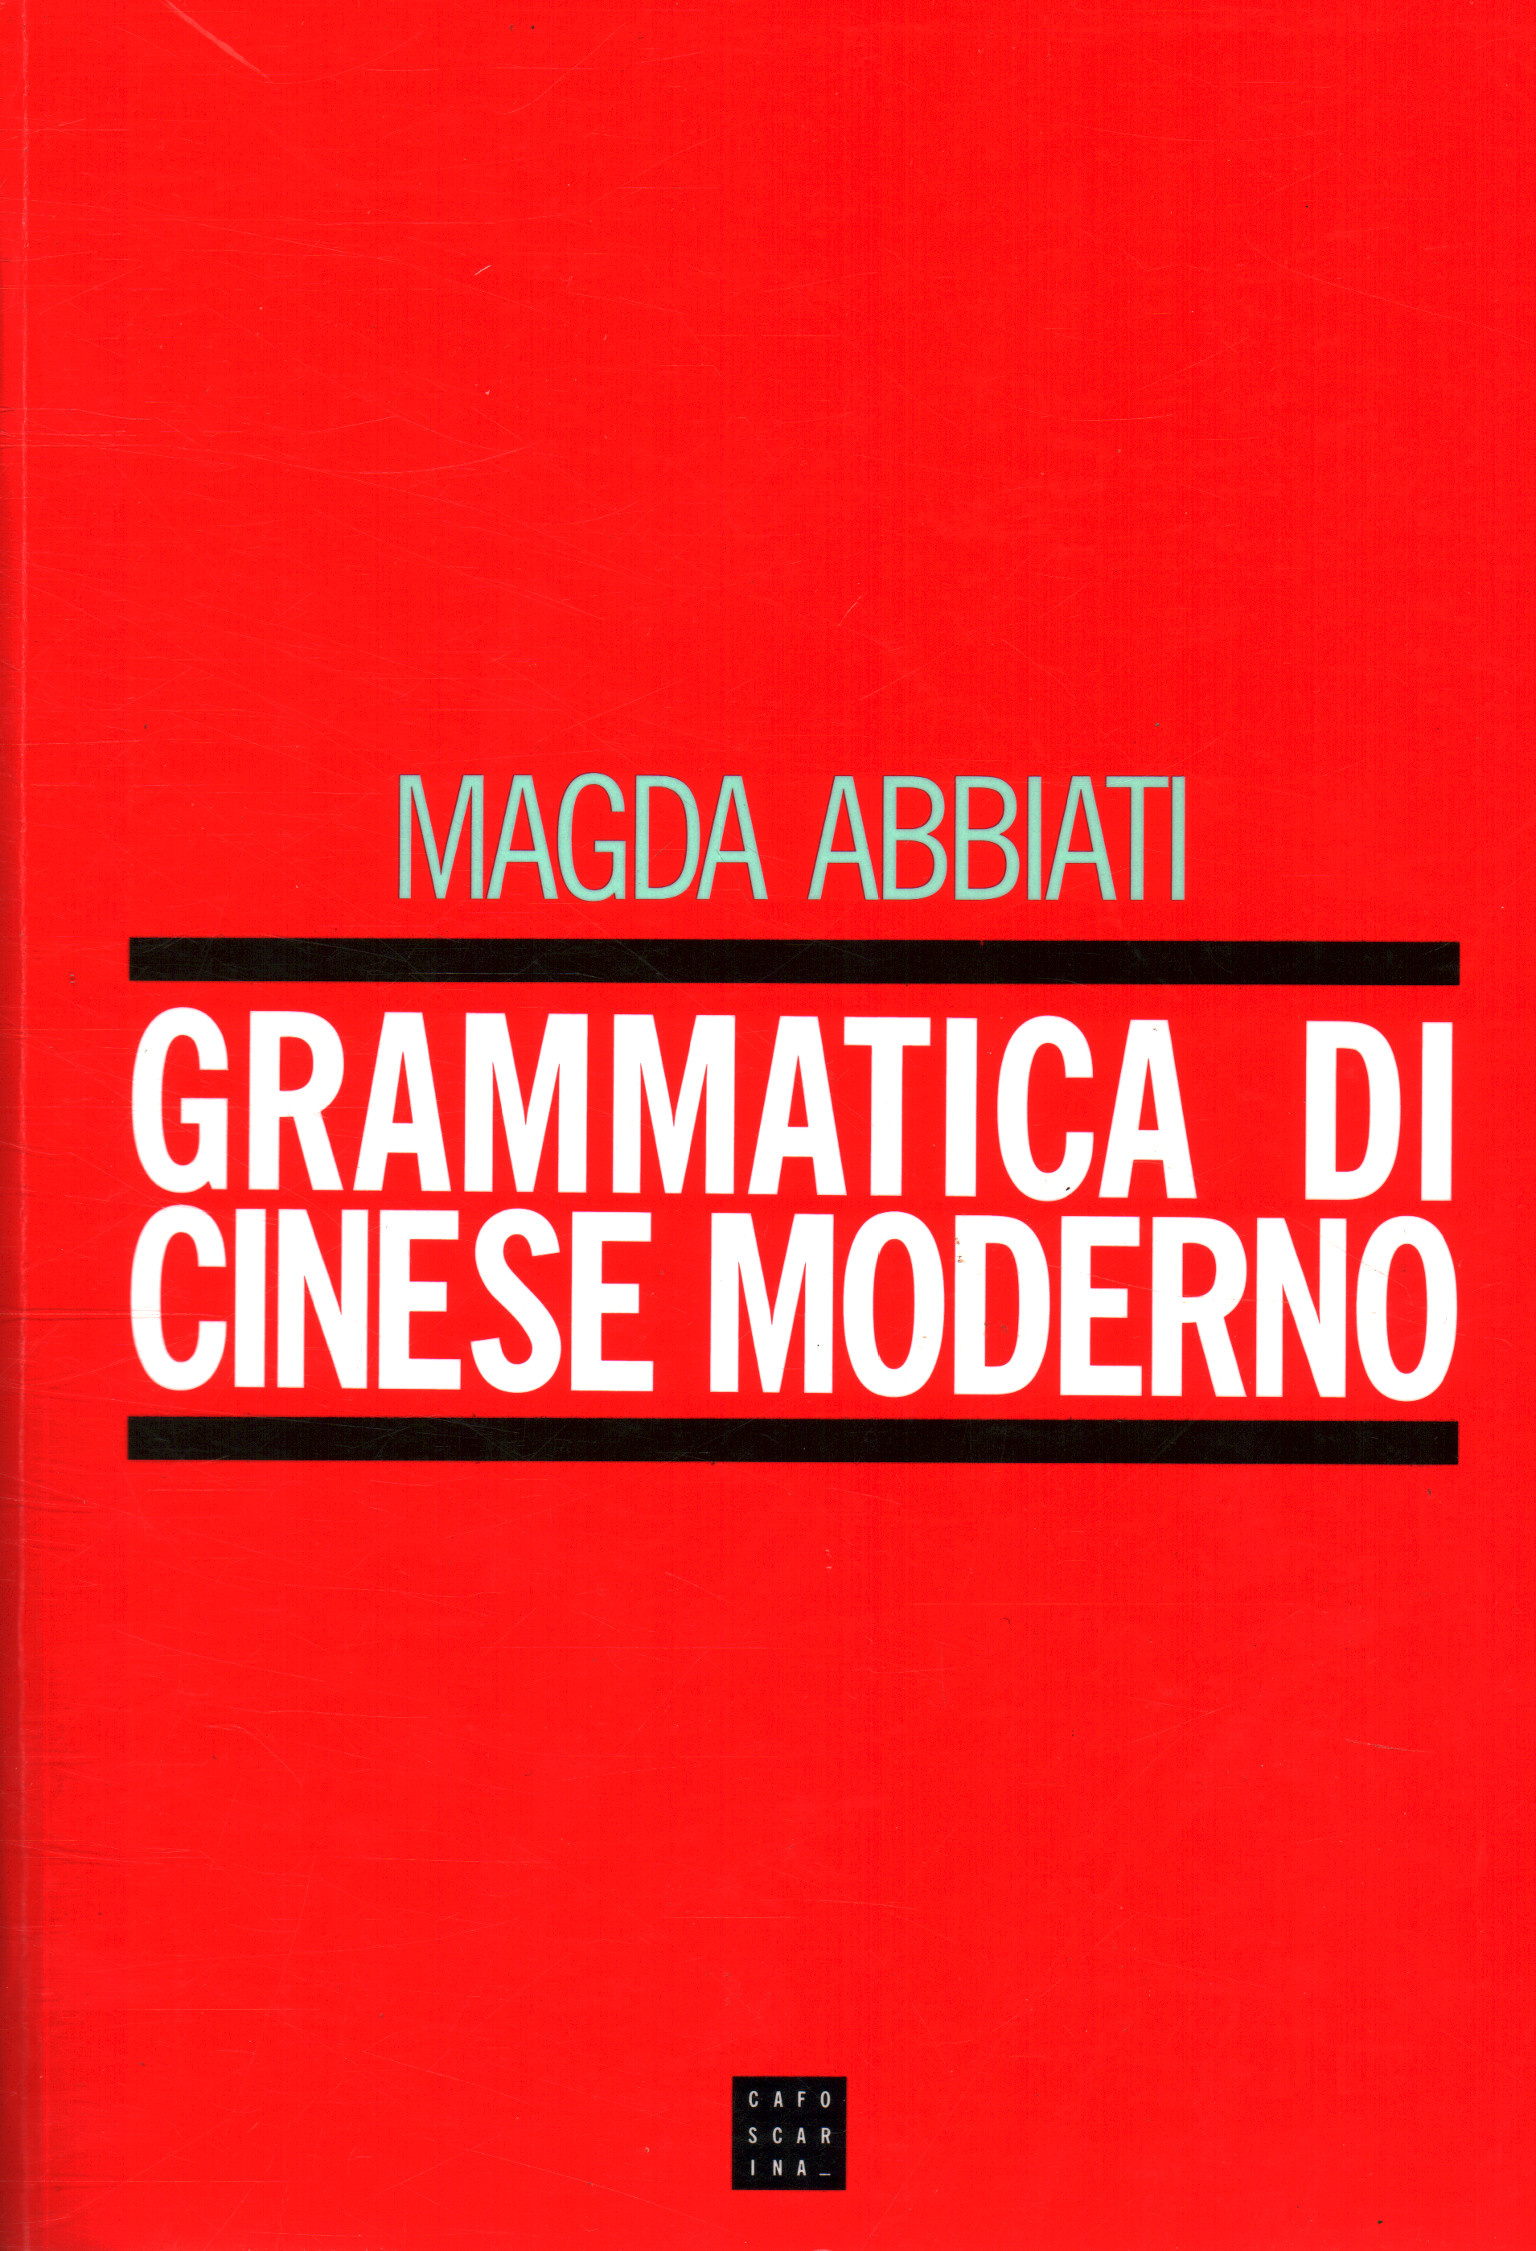 Modern Chinese grammar, Magda Abbiati